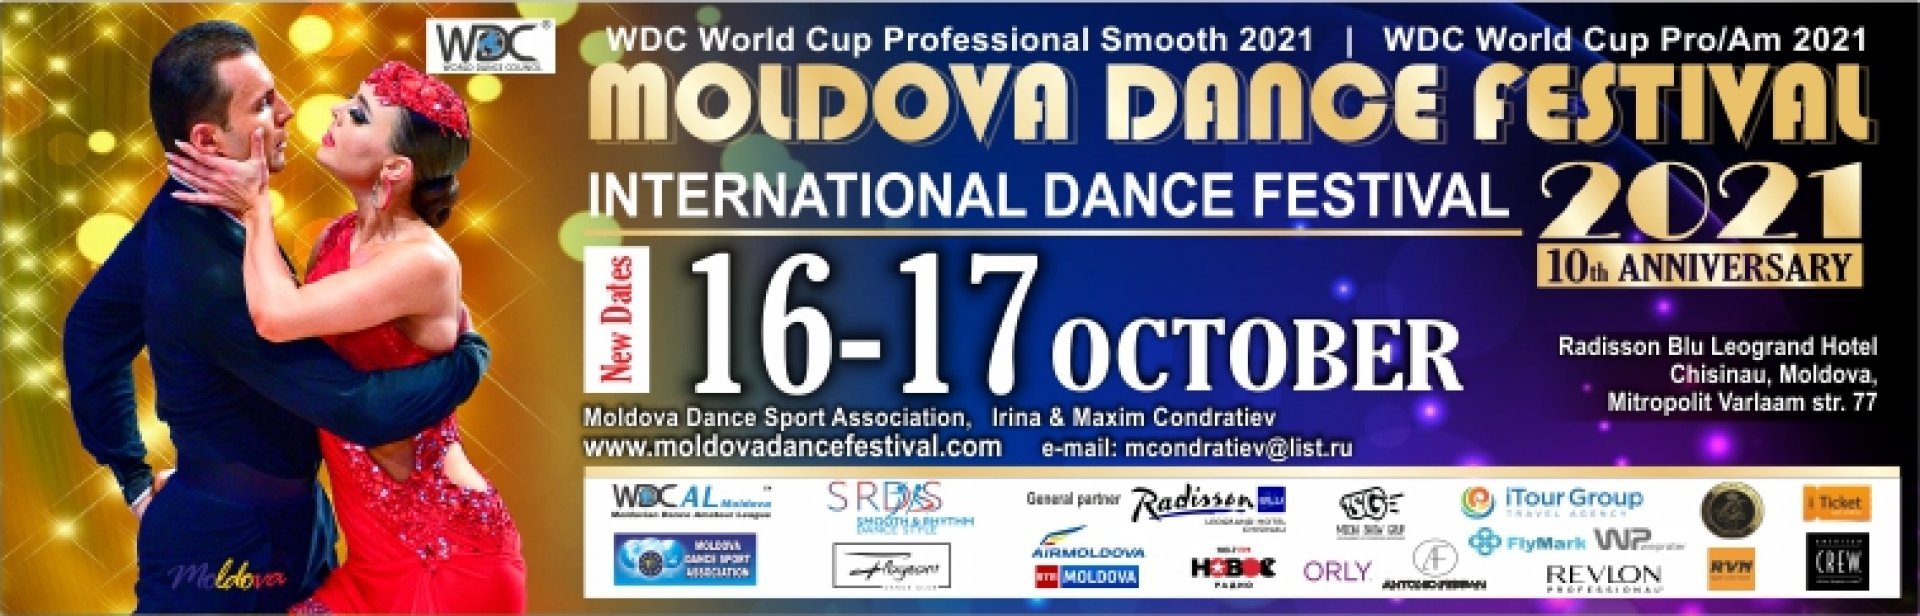 16 Octombrie 08:30-10:00 - Moldova Dance Festival 2021